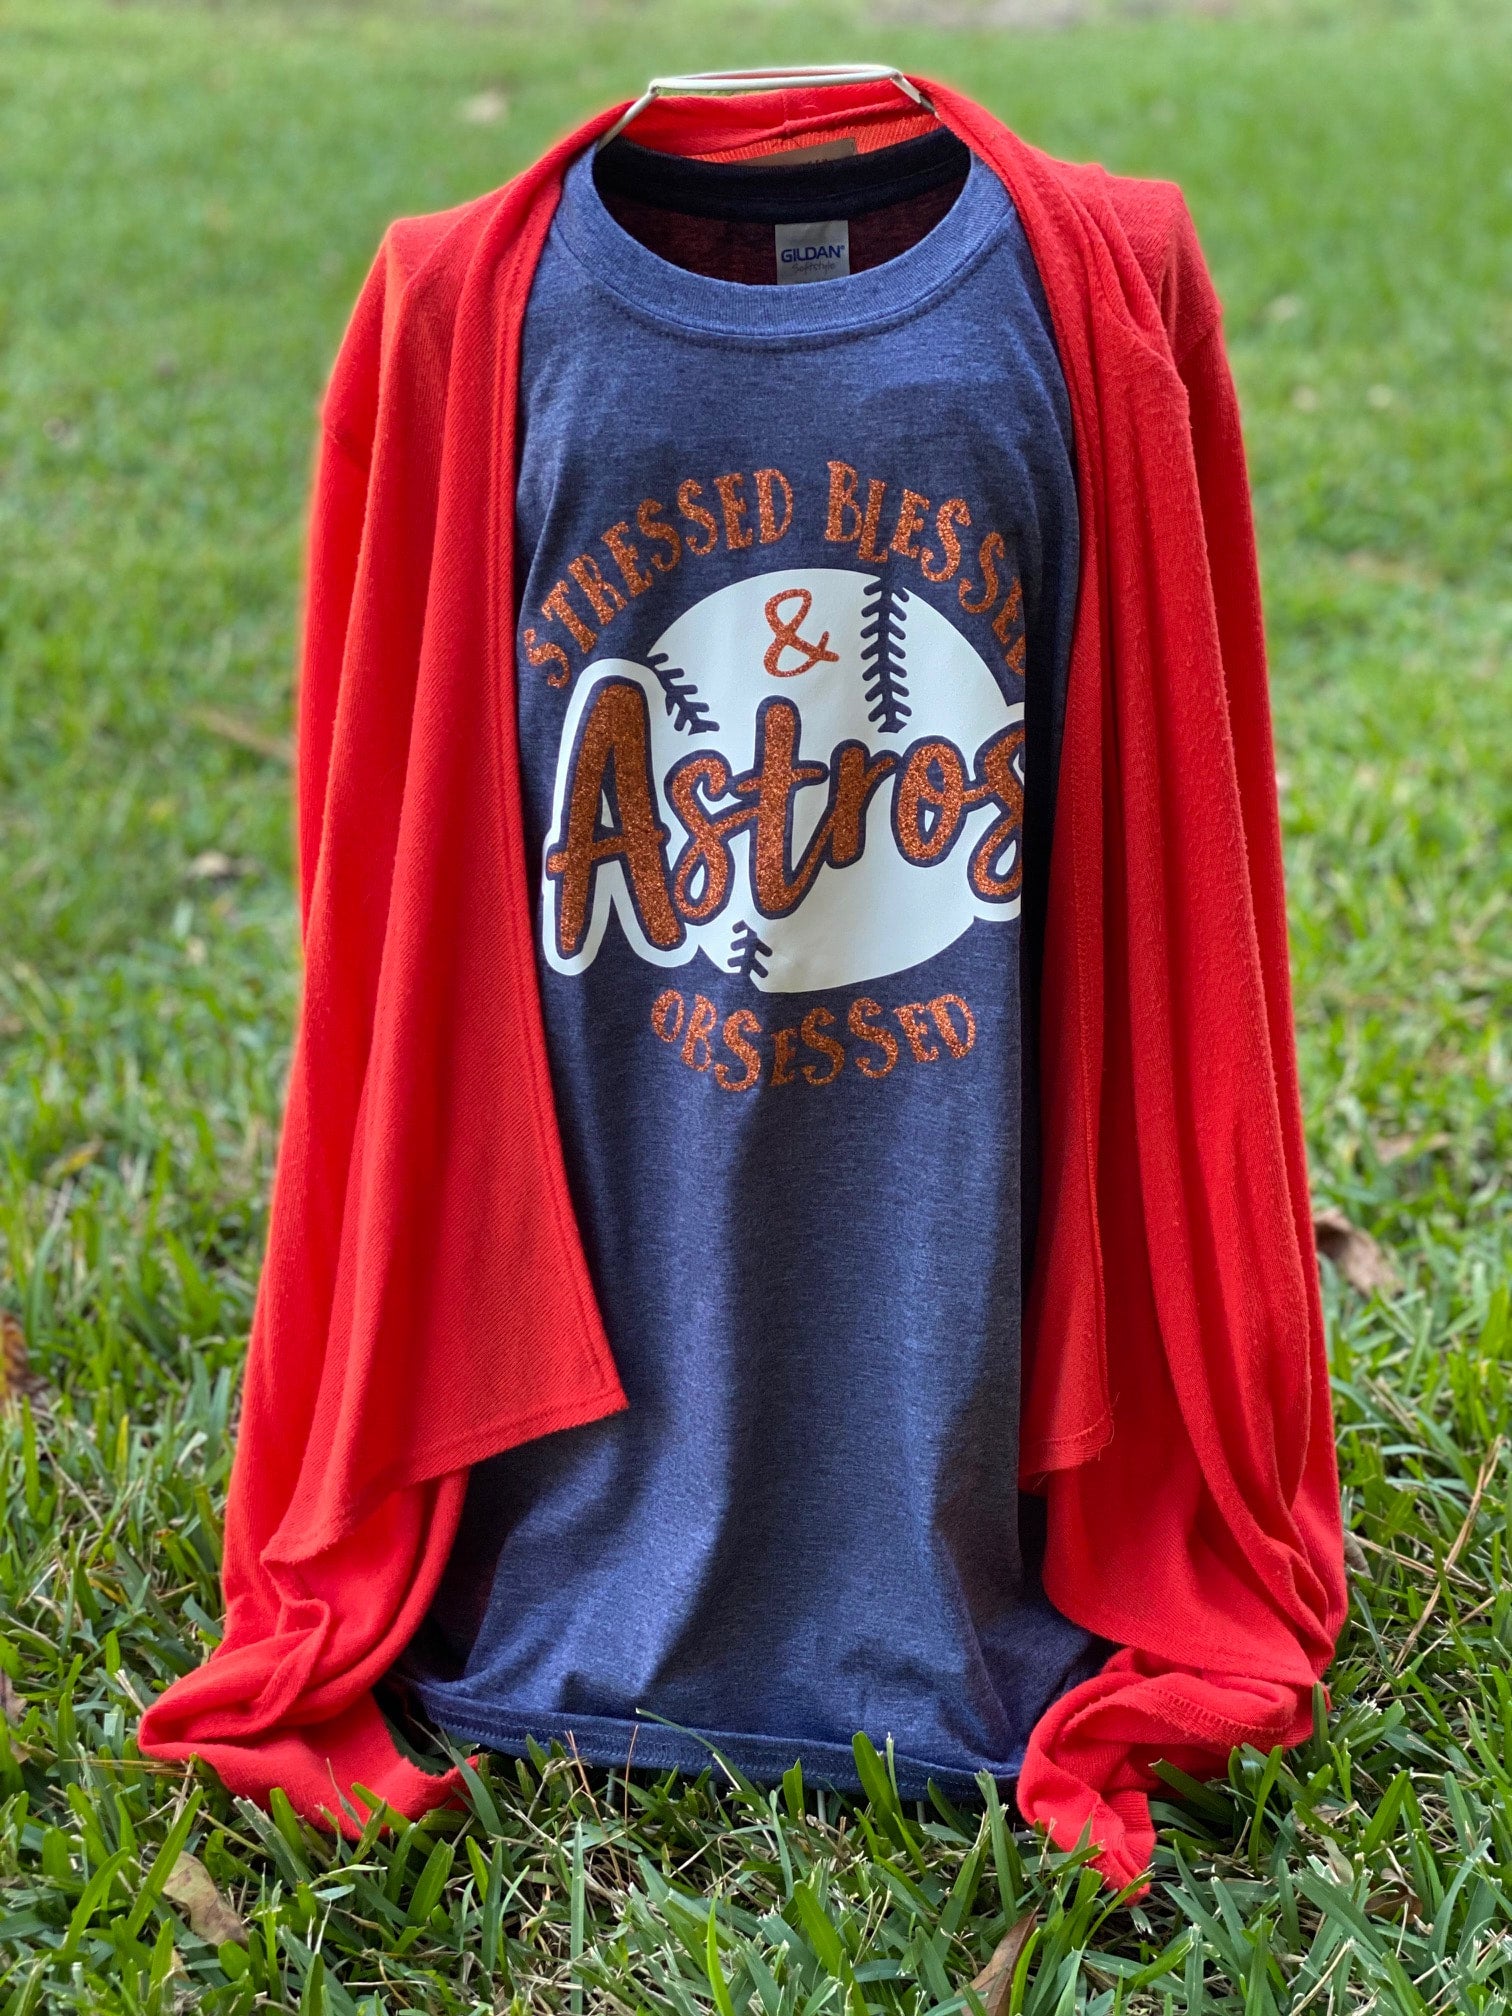 Astros T-Shirt - Shimmer Me